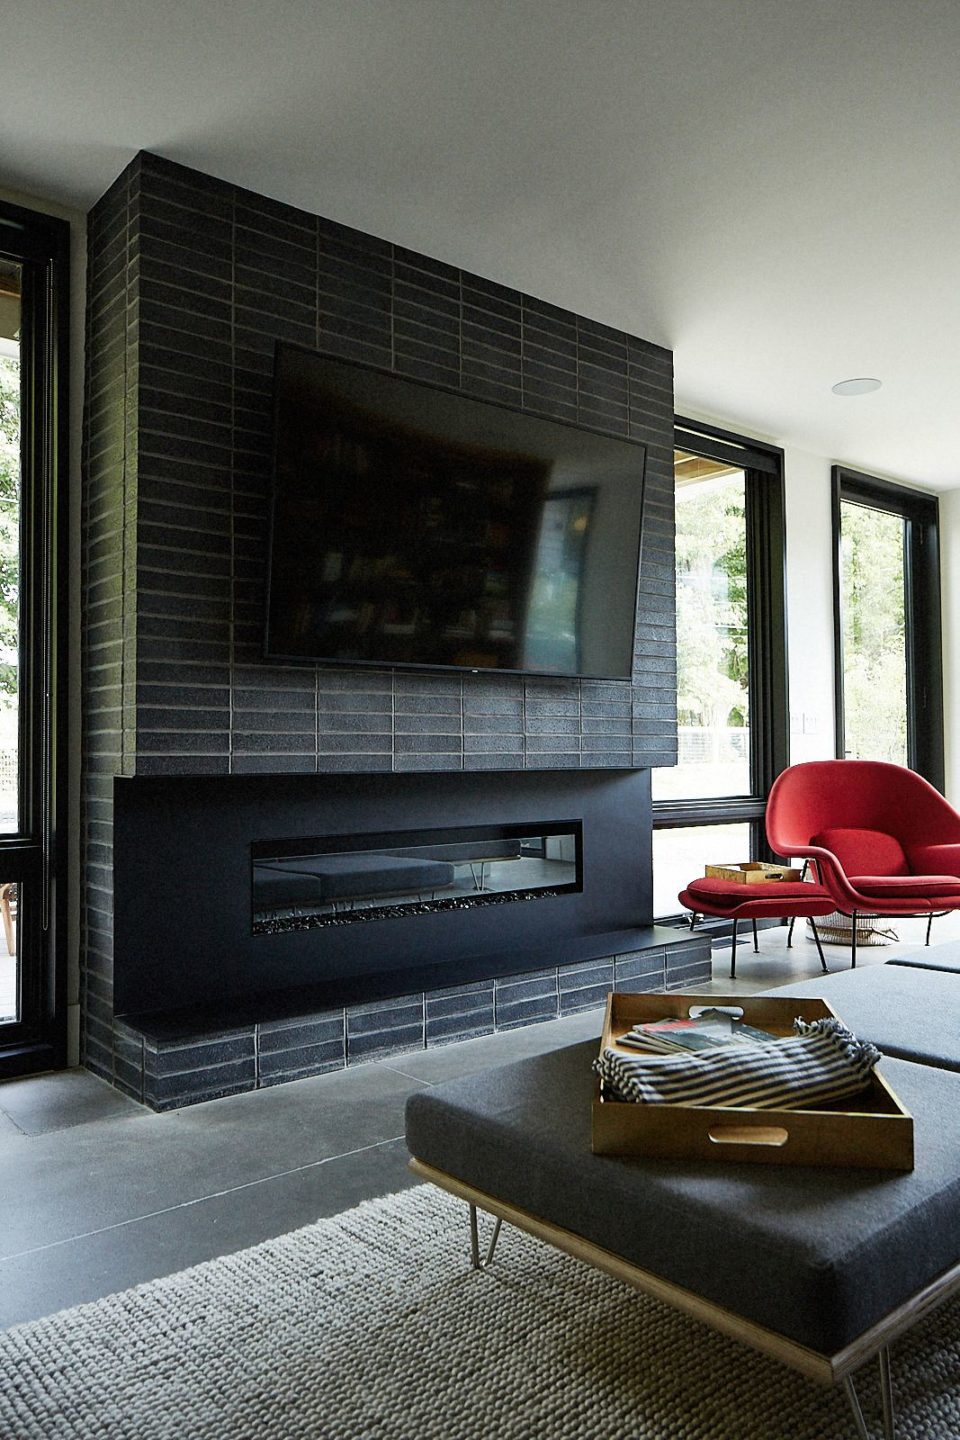 evergreen-portfolio-danish-modern-shingle-home-interior-fireplace-LR-living-room